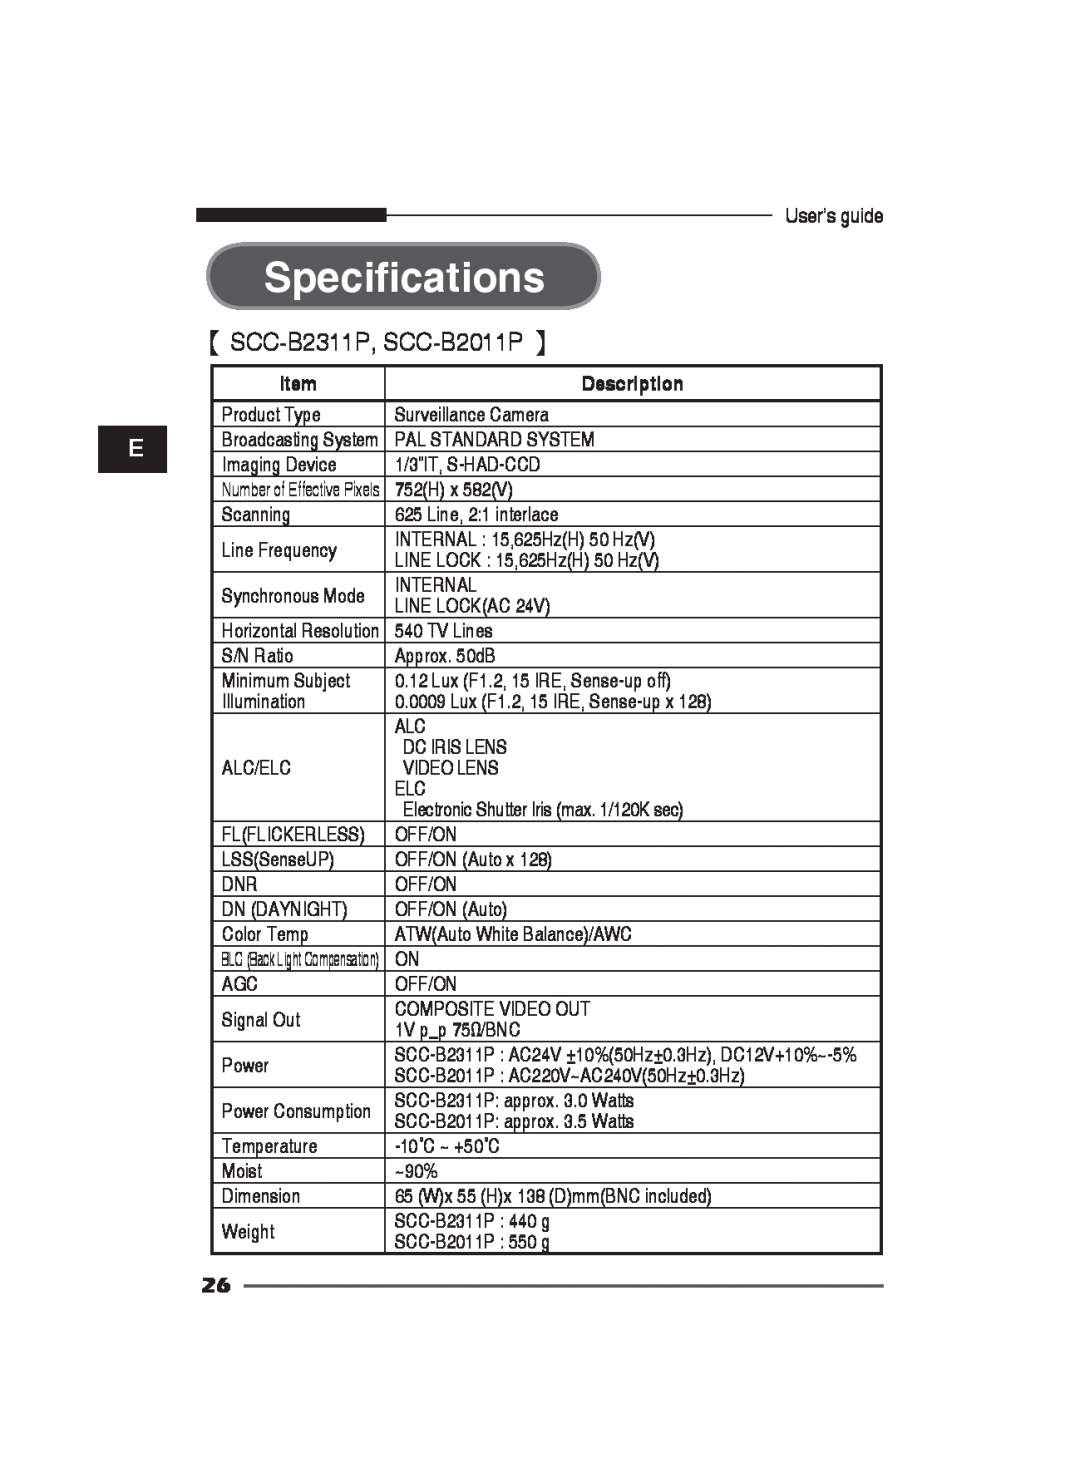 Samsung SCC-B2311N, SCC-B2311P/TRK Specifications, 【 SCC-B2311P, SCC-B2011P 】, Description, Number of Effective Pixels 